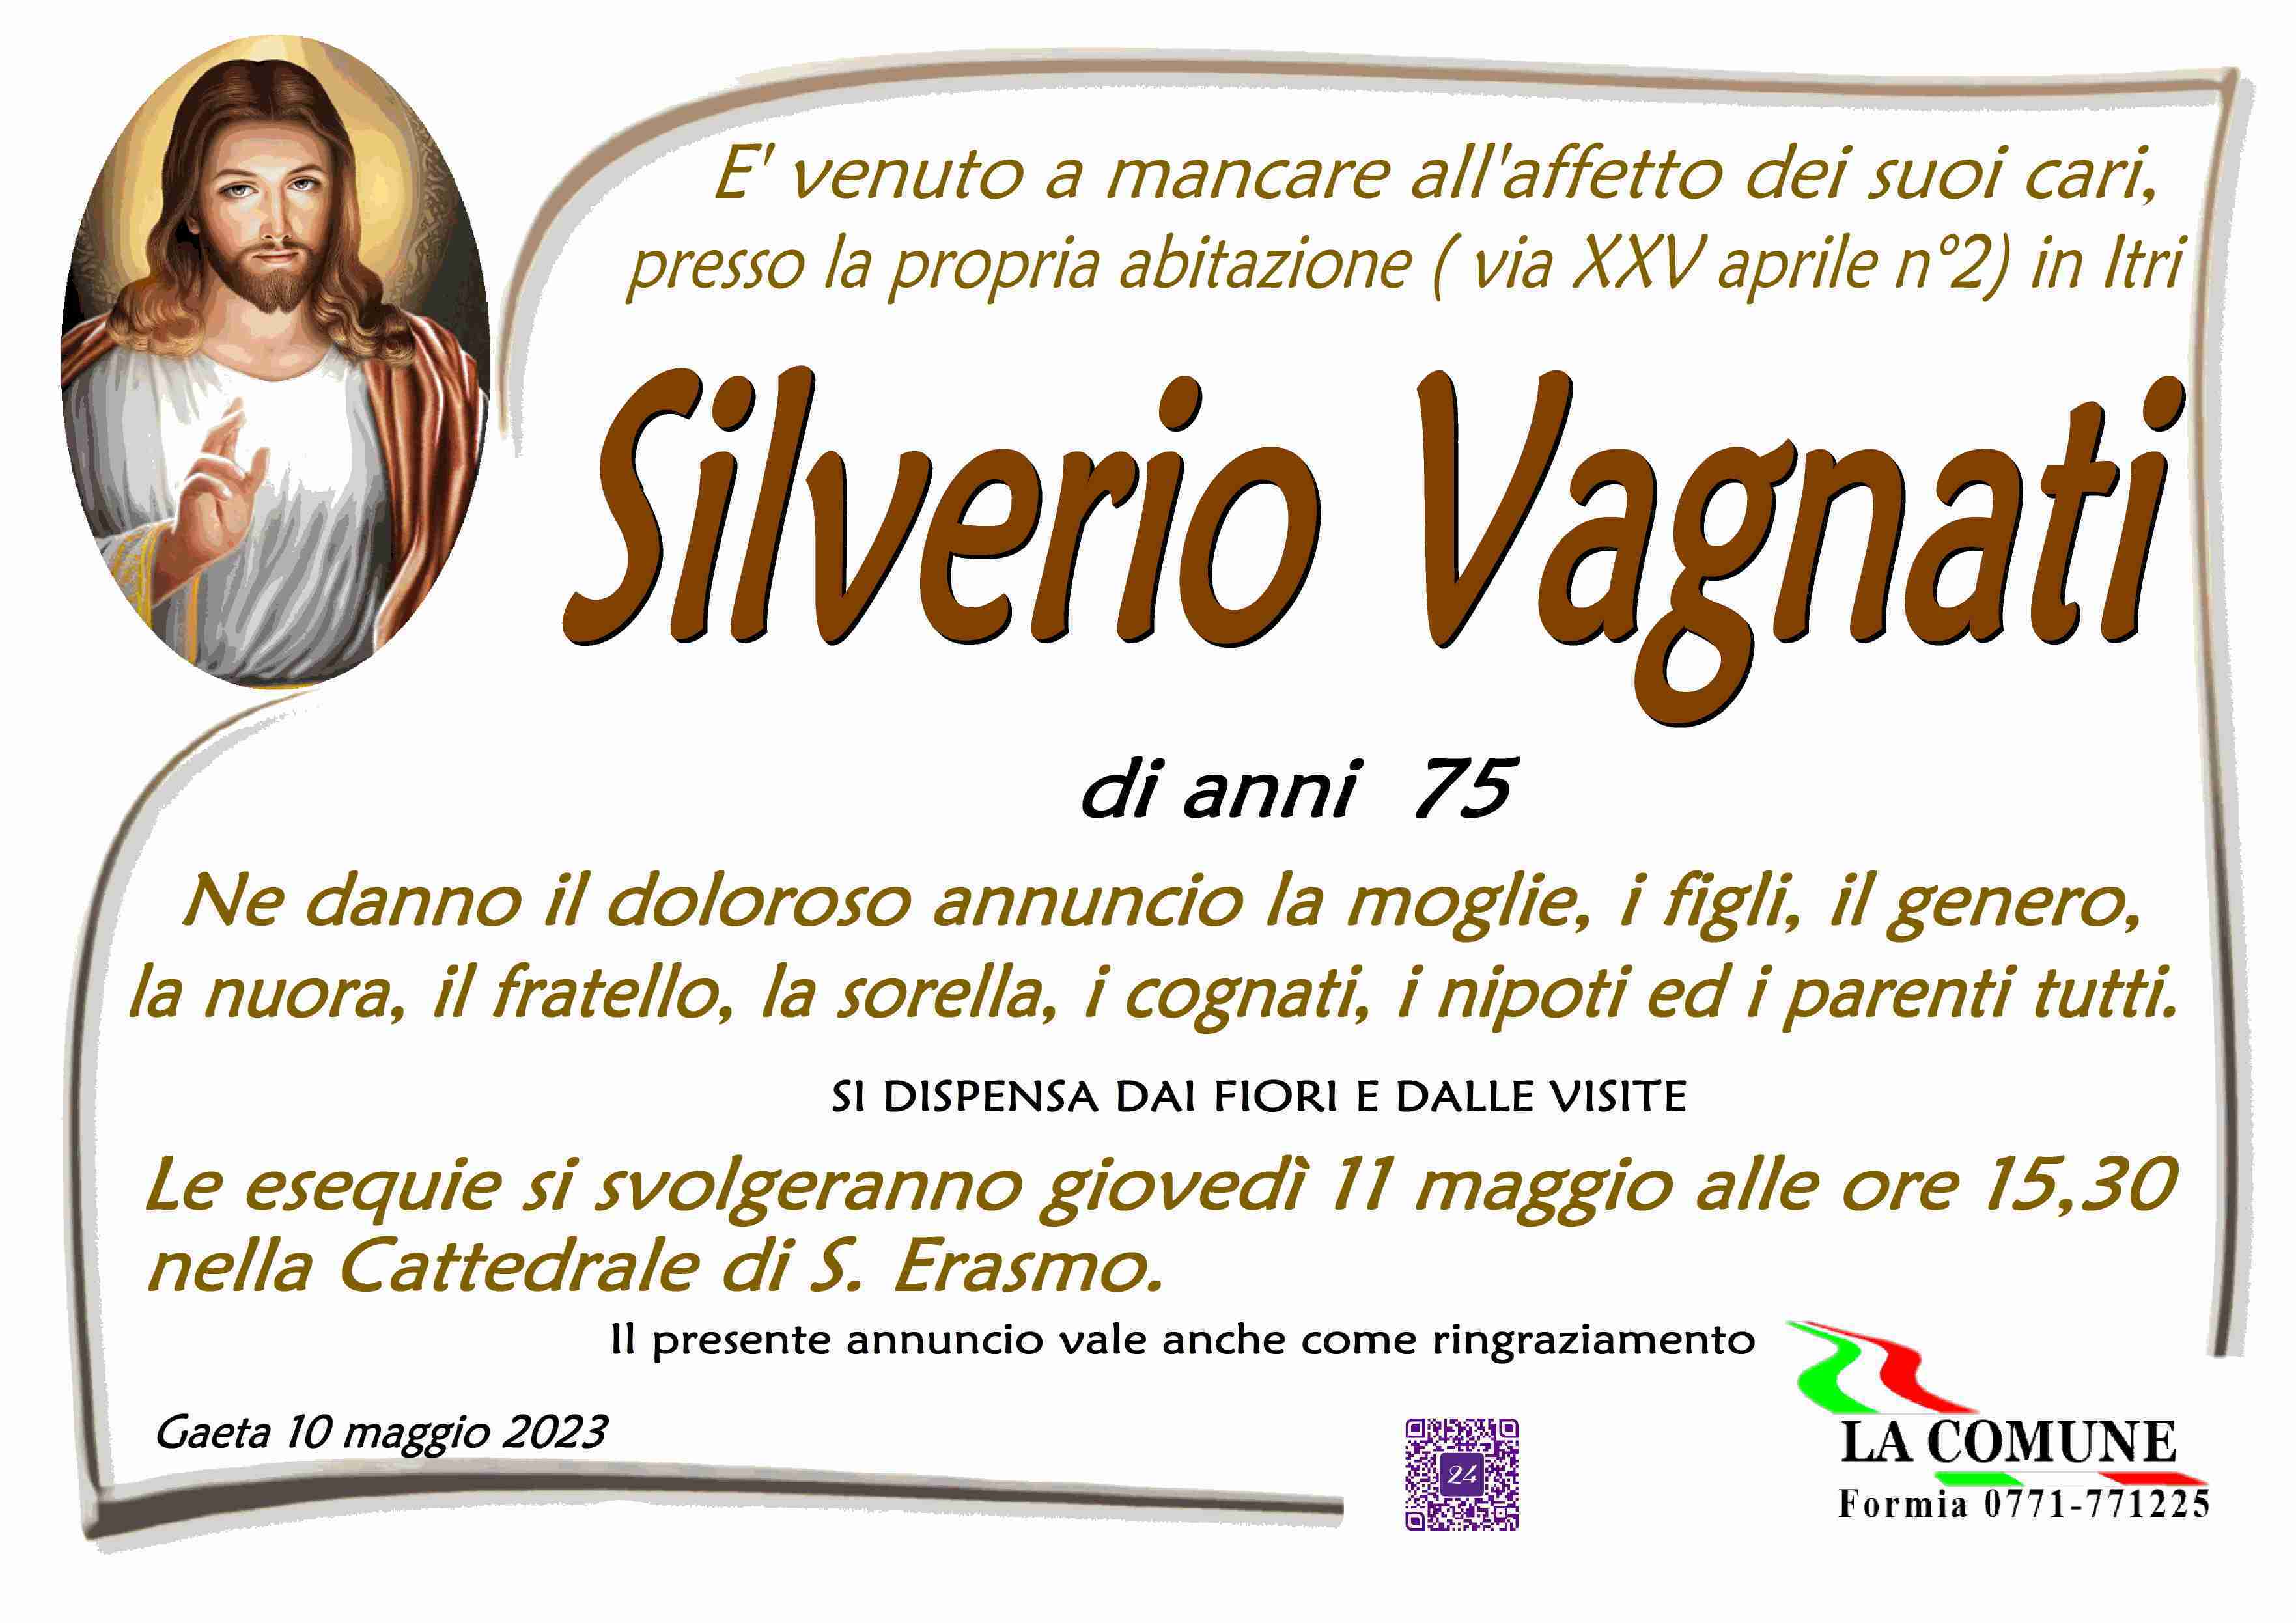 Silverio Vagnati